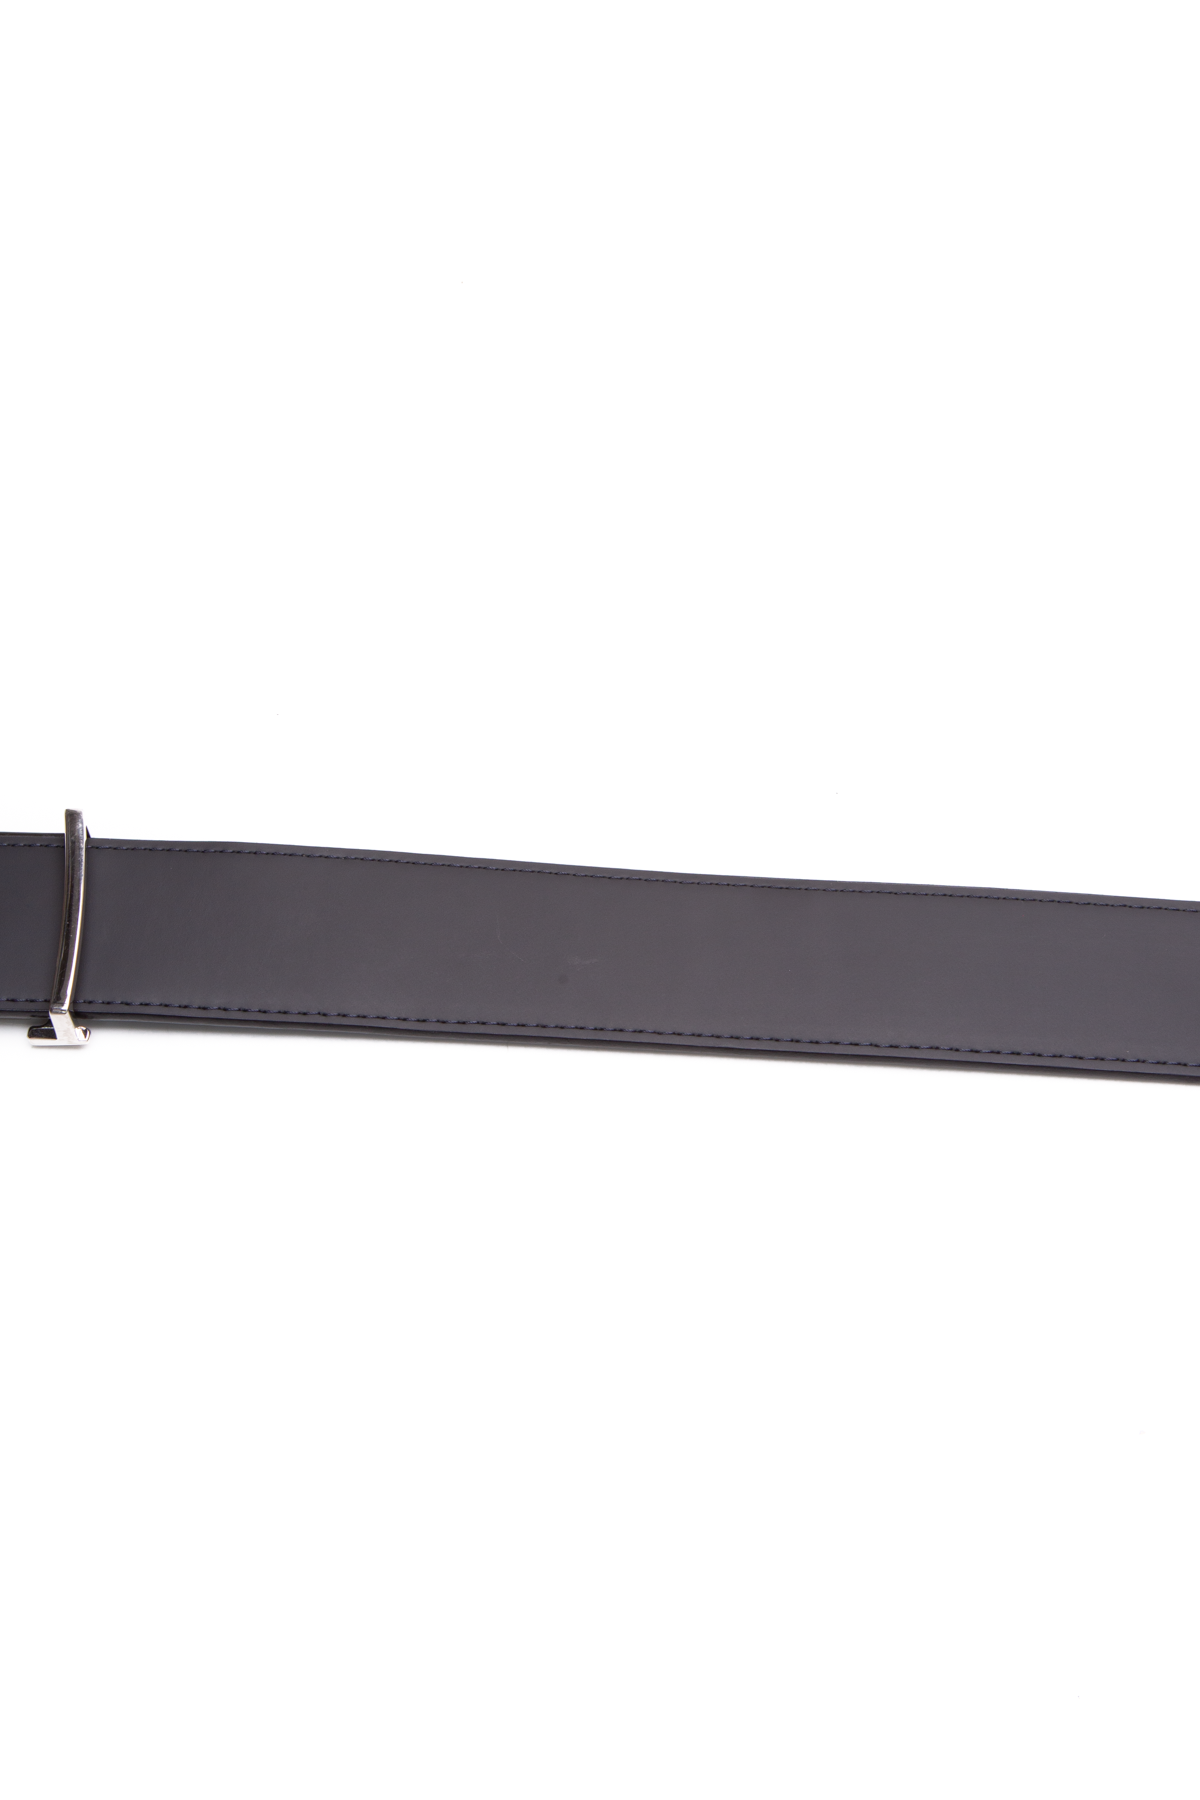 Louis Vuitton - Authenticated Initiales Belt - Leather Black Plain For Woman, Never Worn